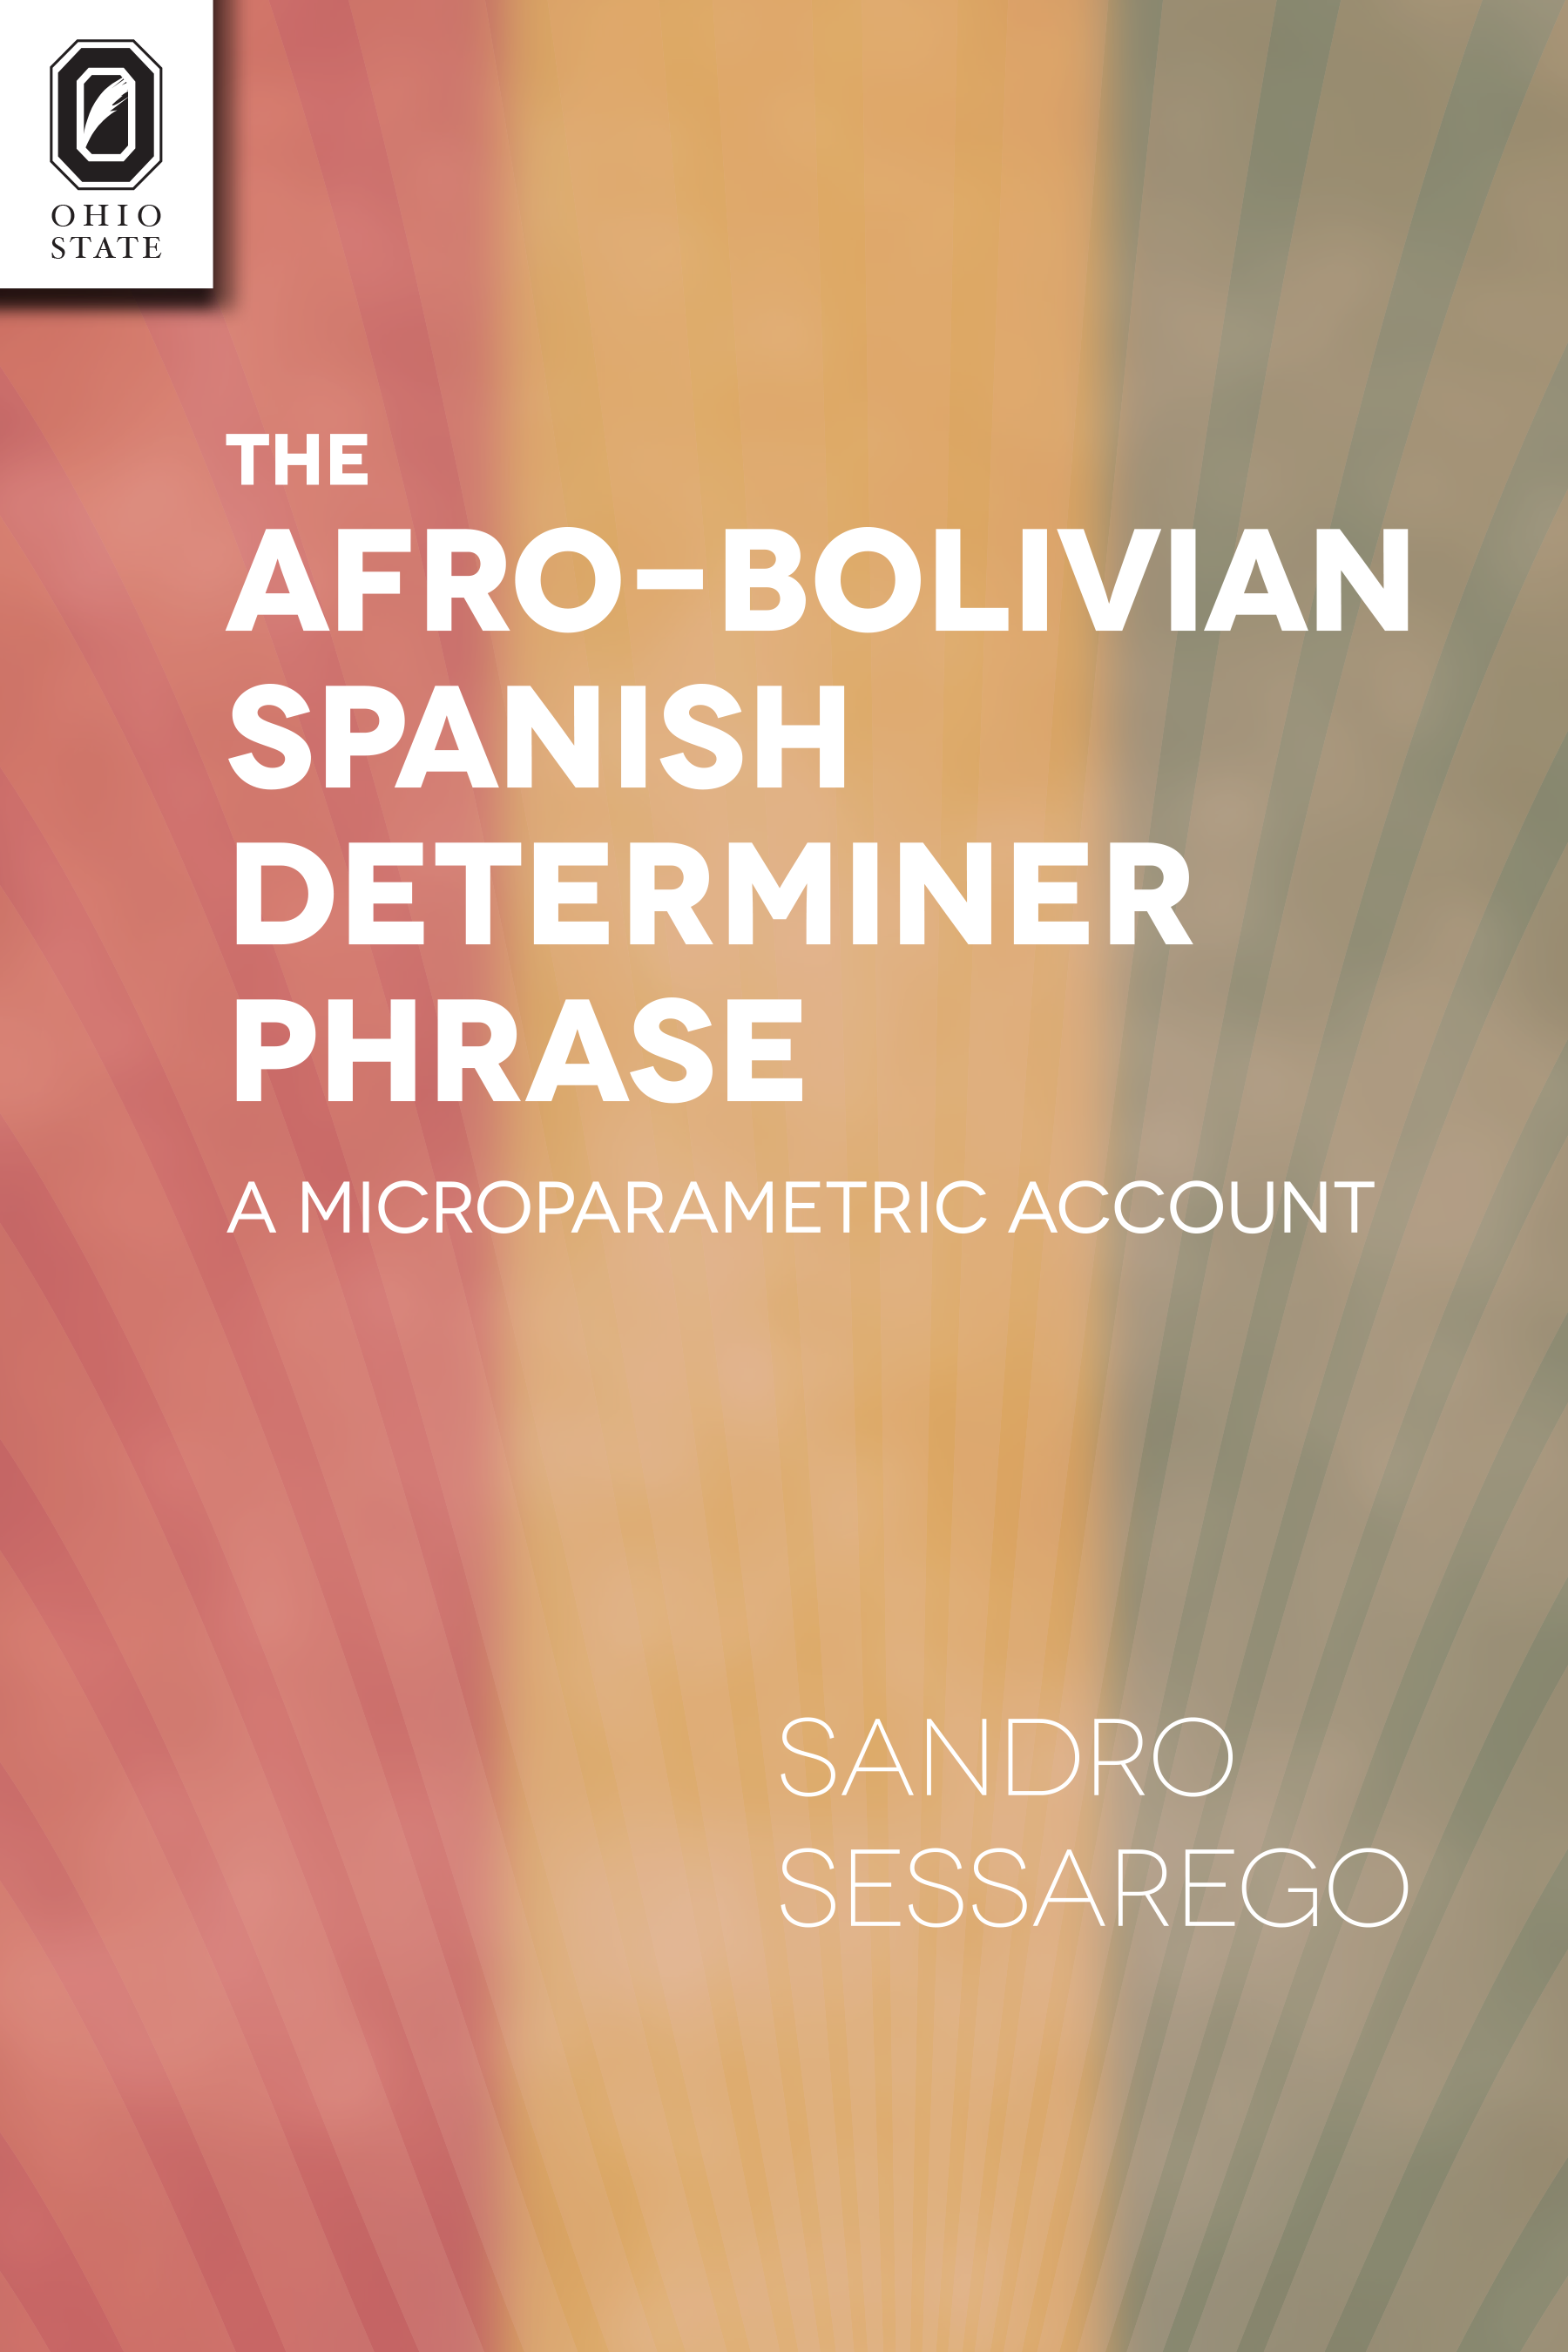 Imagen de portada del libro The Afro-Bolivian Spanish Determiner Phrase